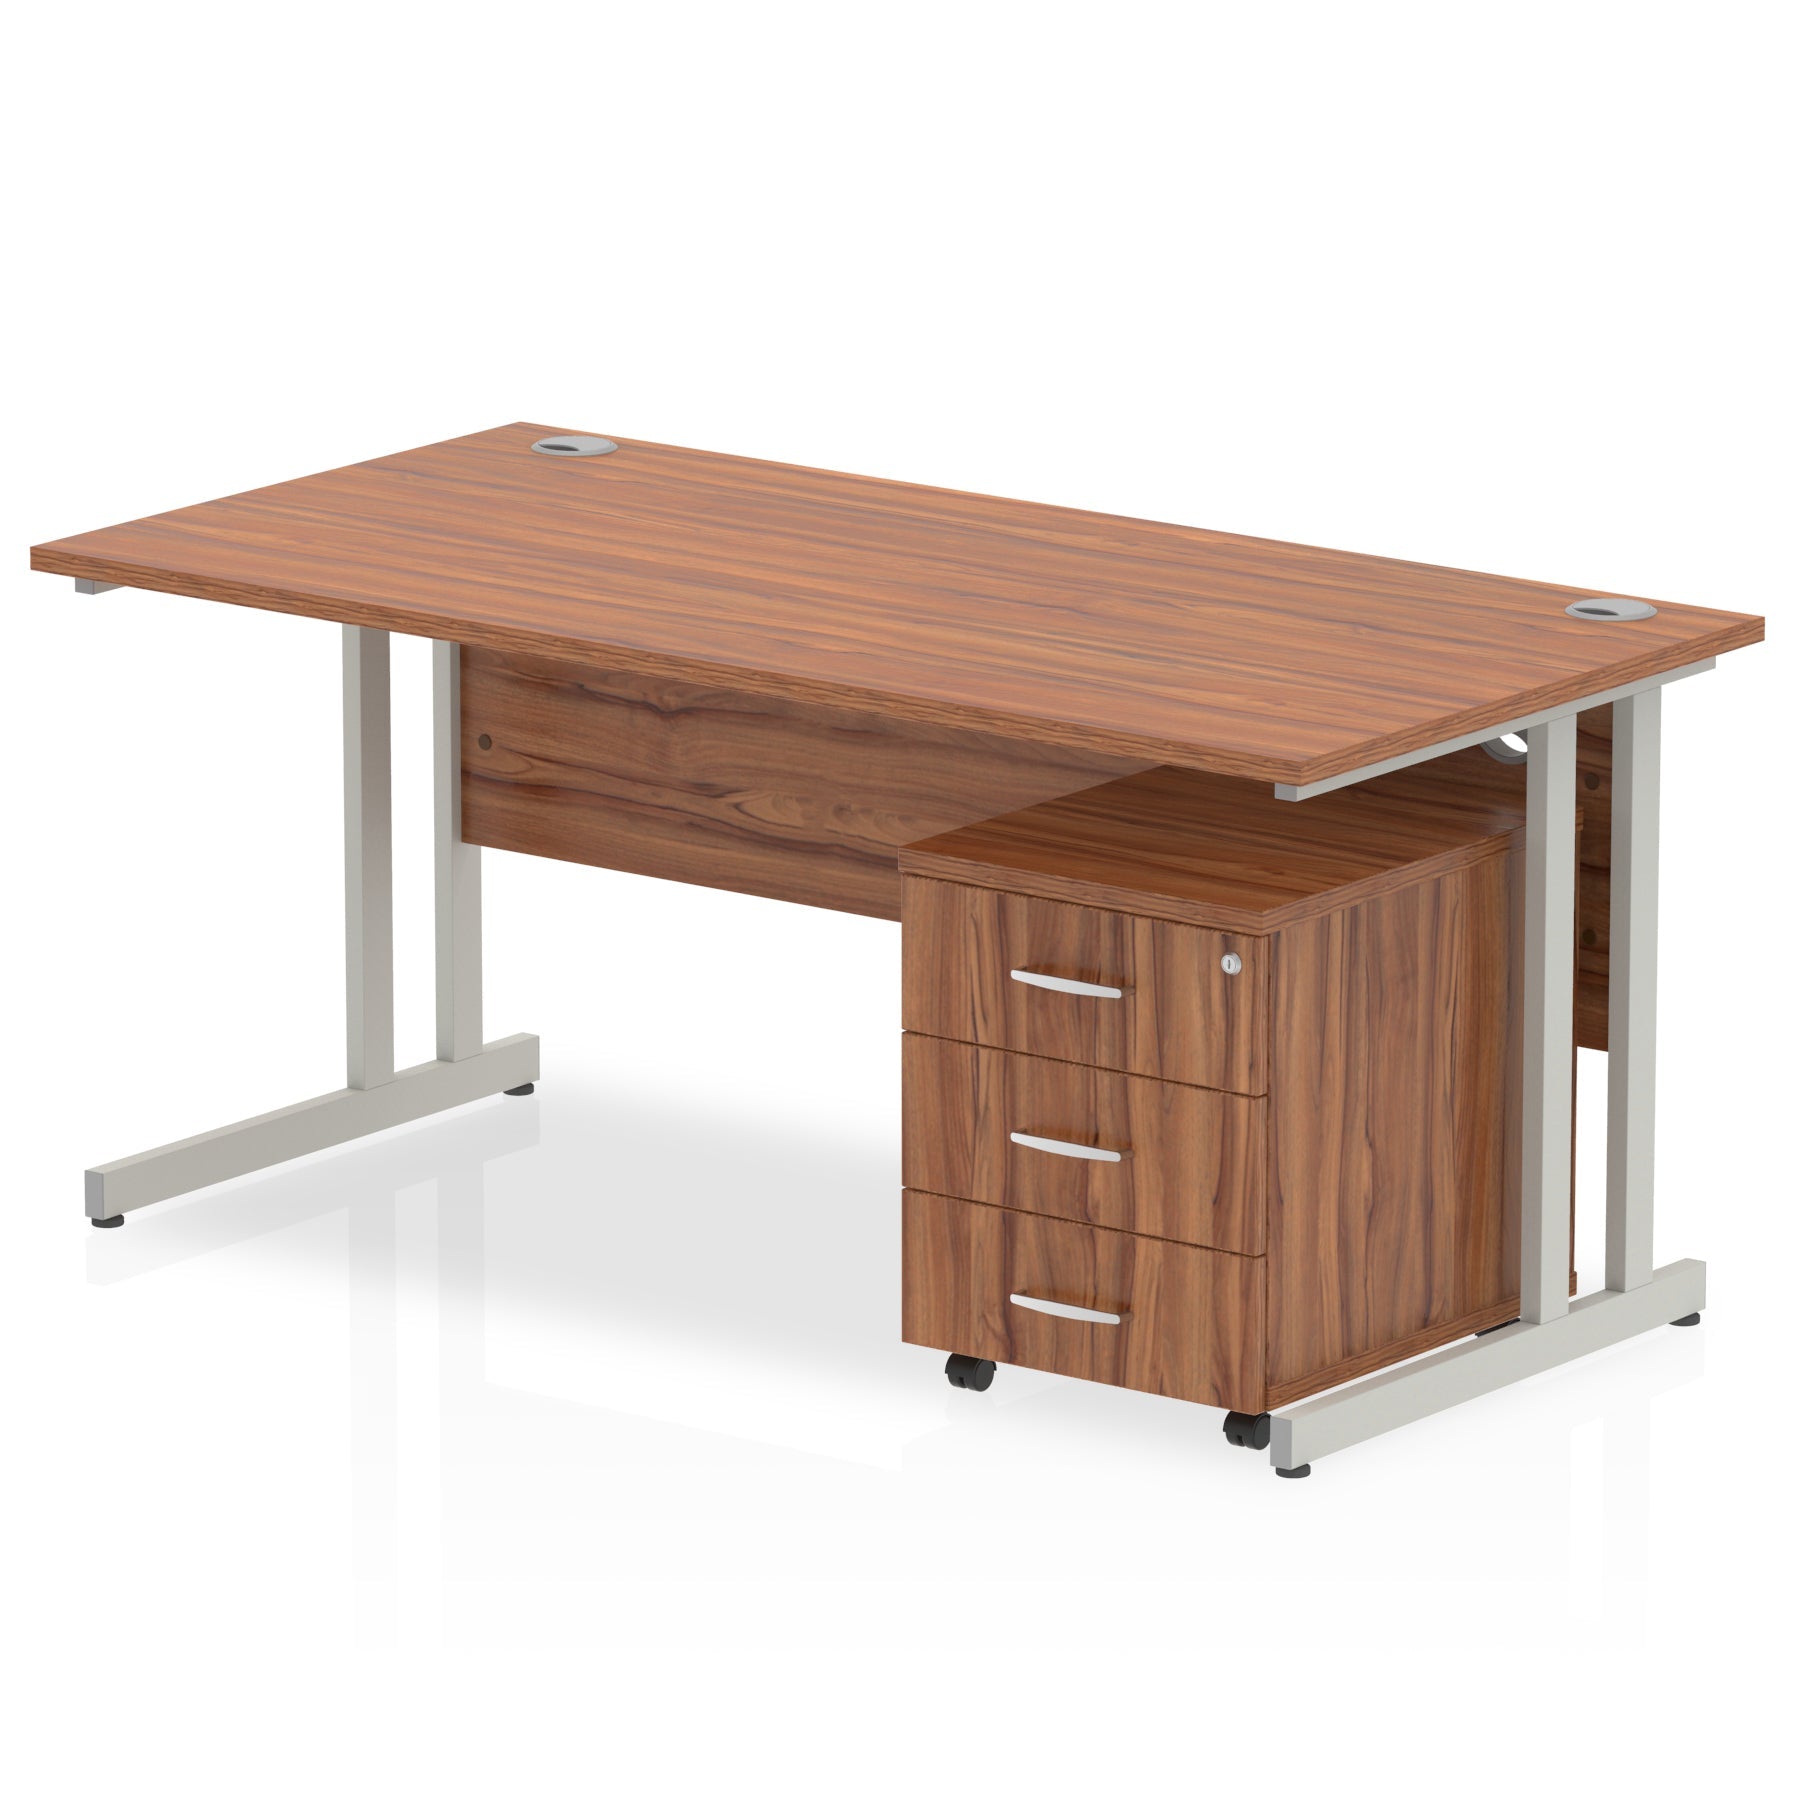 Impulse 1800mm Cantilever Straight Desk With Mobile Pedestal